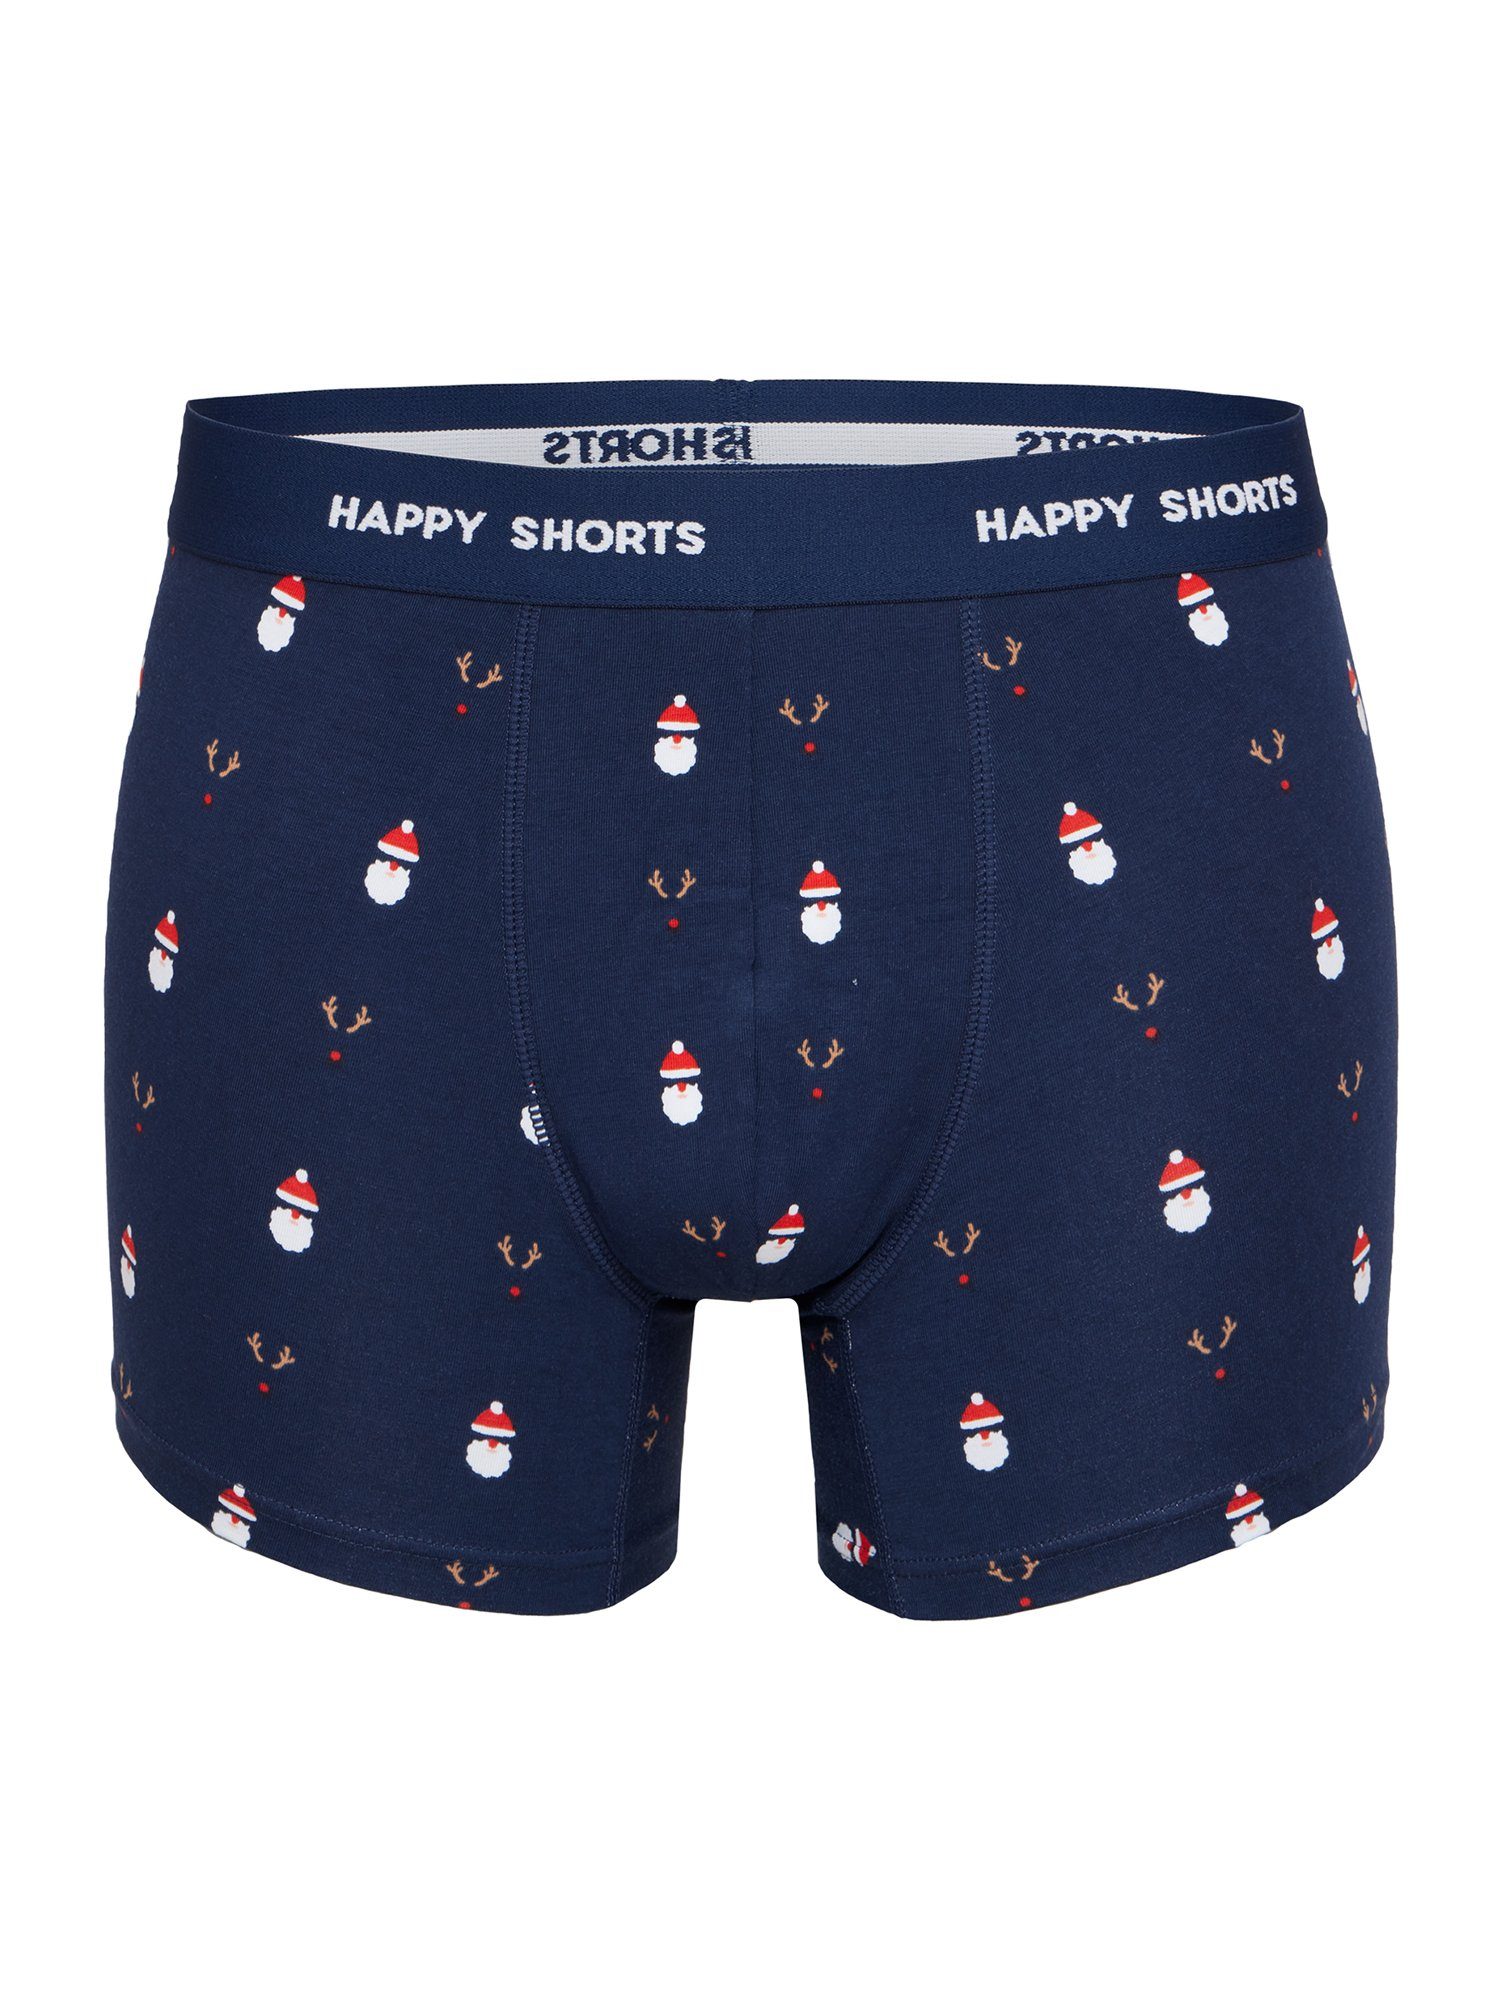 HAPPY SHORTS Retro-Boxer Rudolph Retro Santa XMAS Pants unterhose Retro-shorts (2-St)